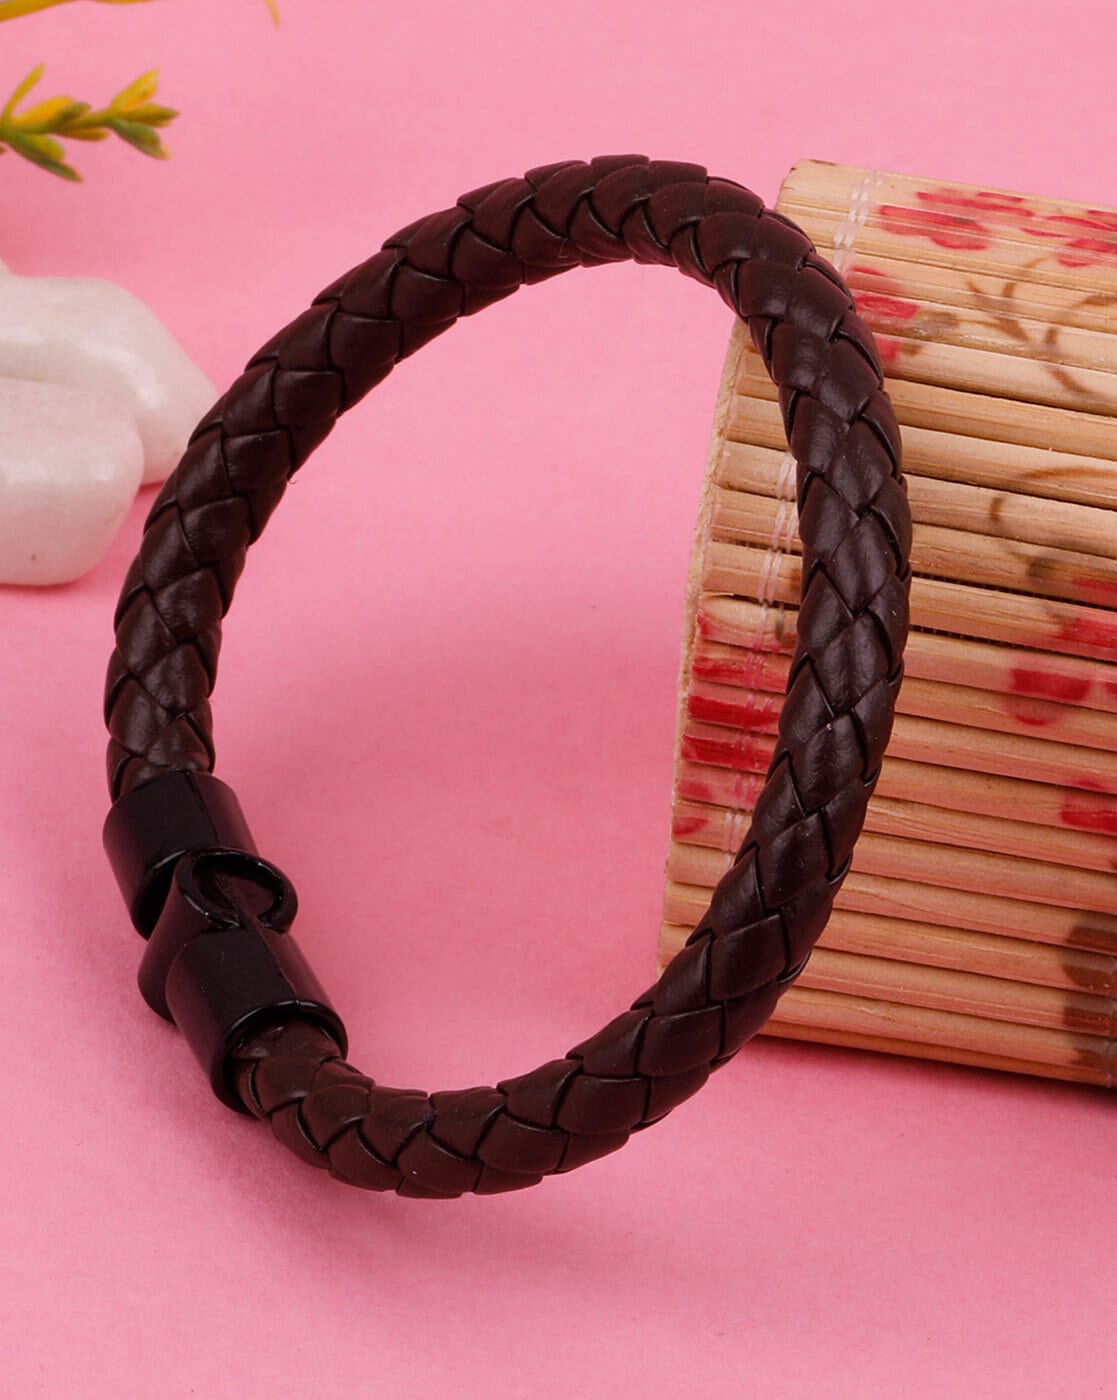 Leather bracelet plait  leather strips braided with dark fabric strings   Jewelry Eshop